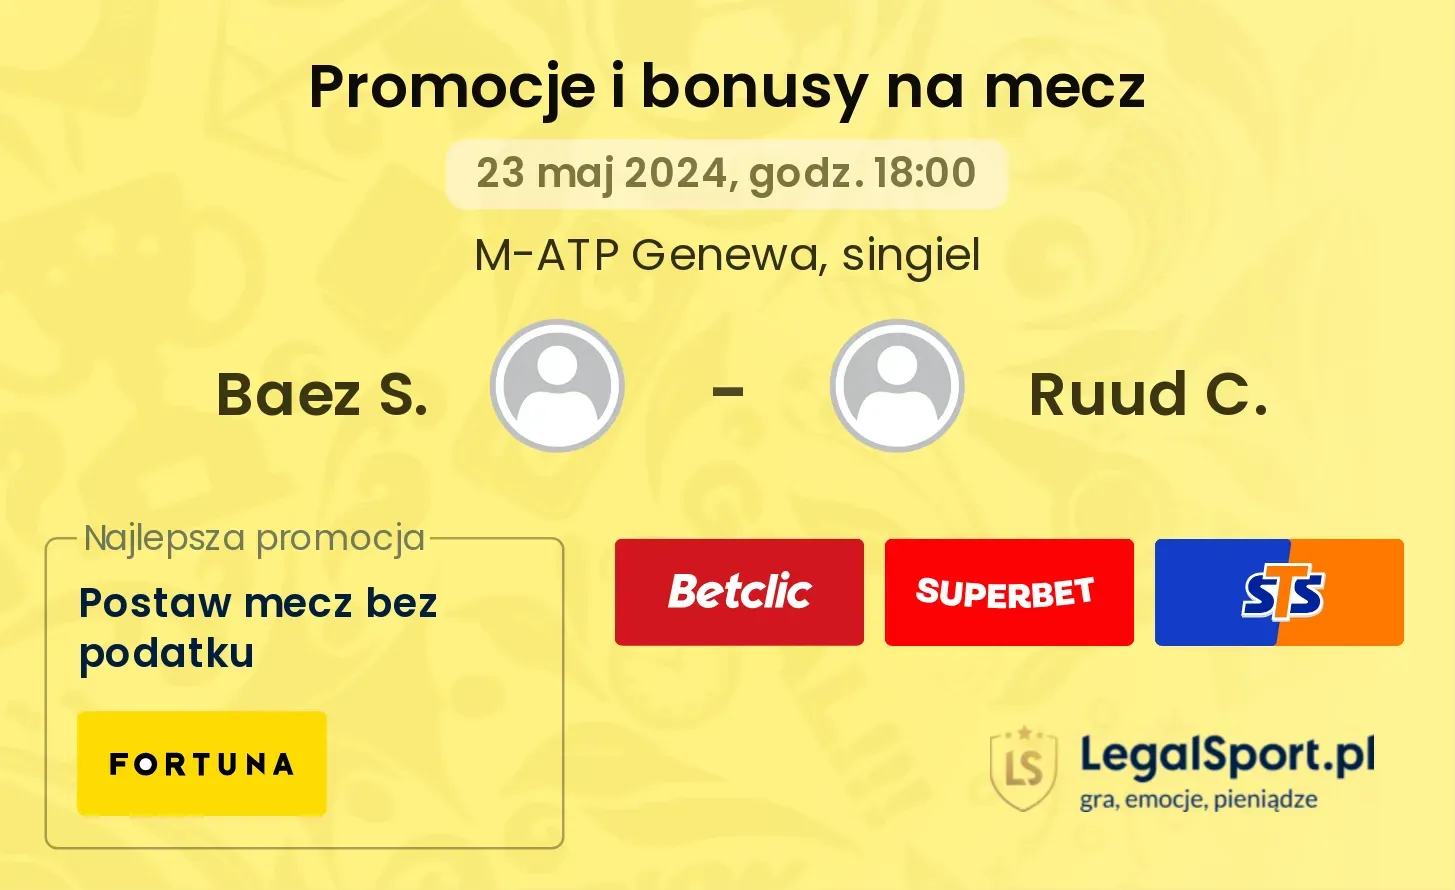 Baez S. - Ruud C. promocje bonusy na mecz